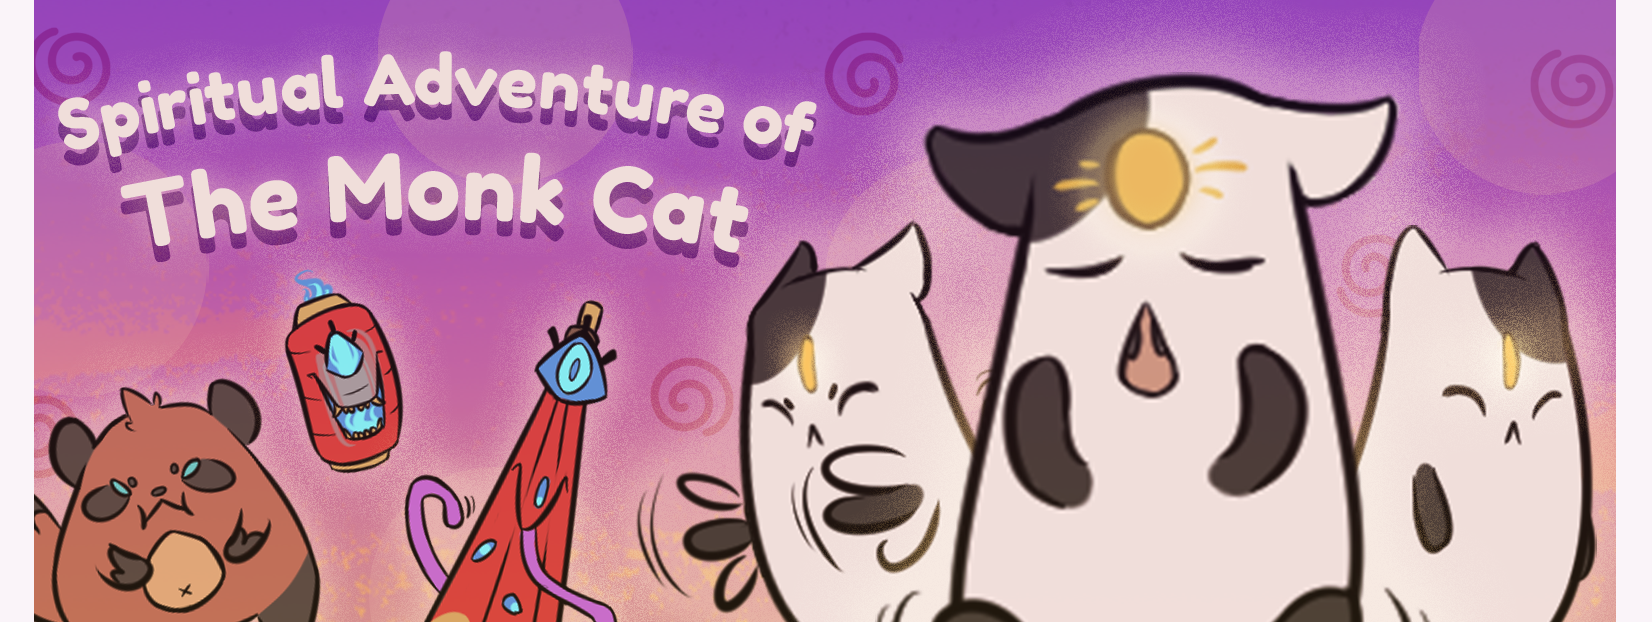 Spiritual Adventure of The Monk Cat